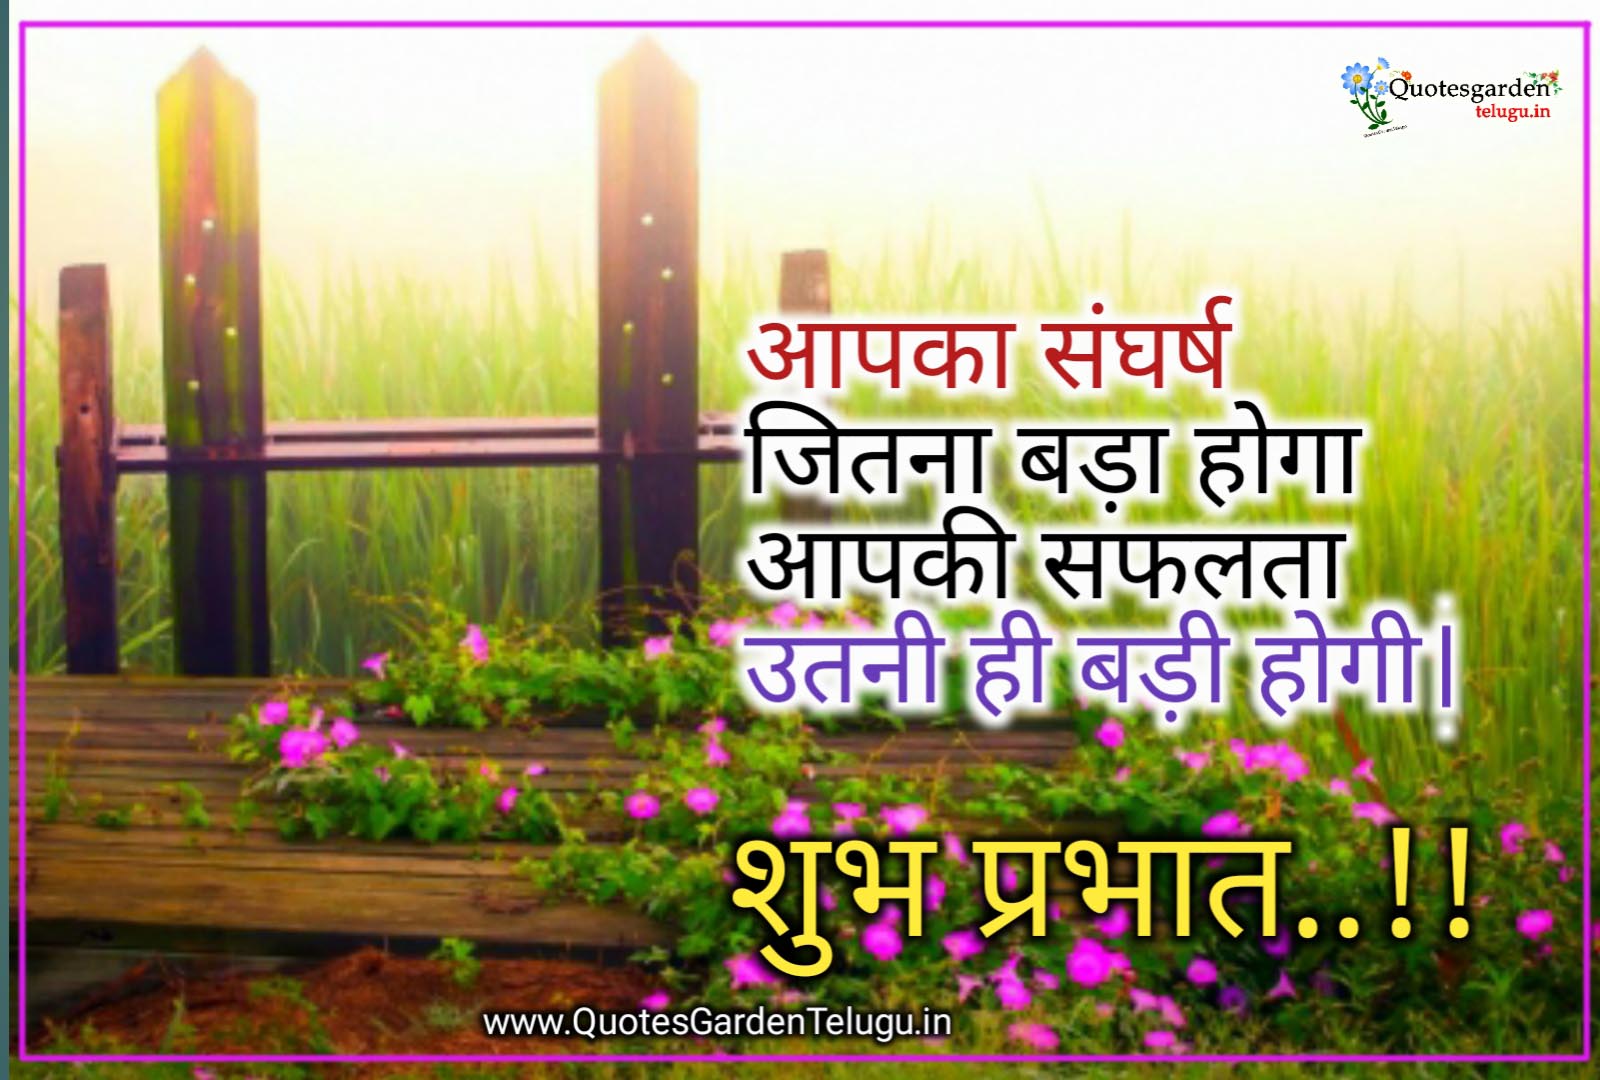 Good morning inspirational quotes life quotes in Hindi shayari ...